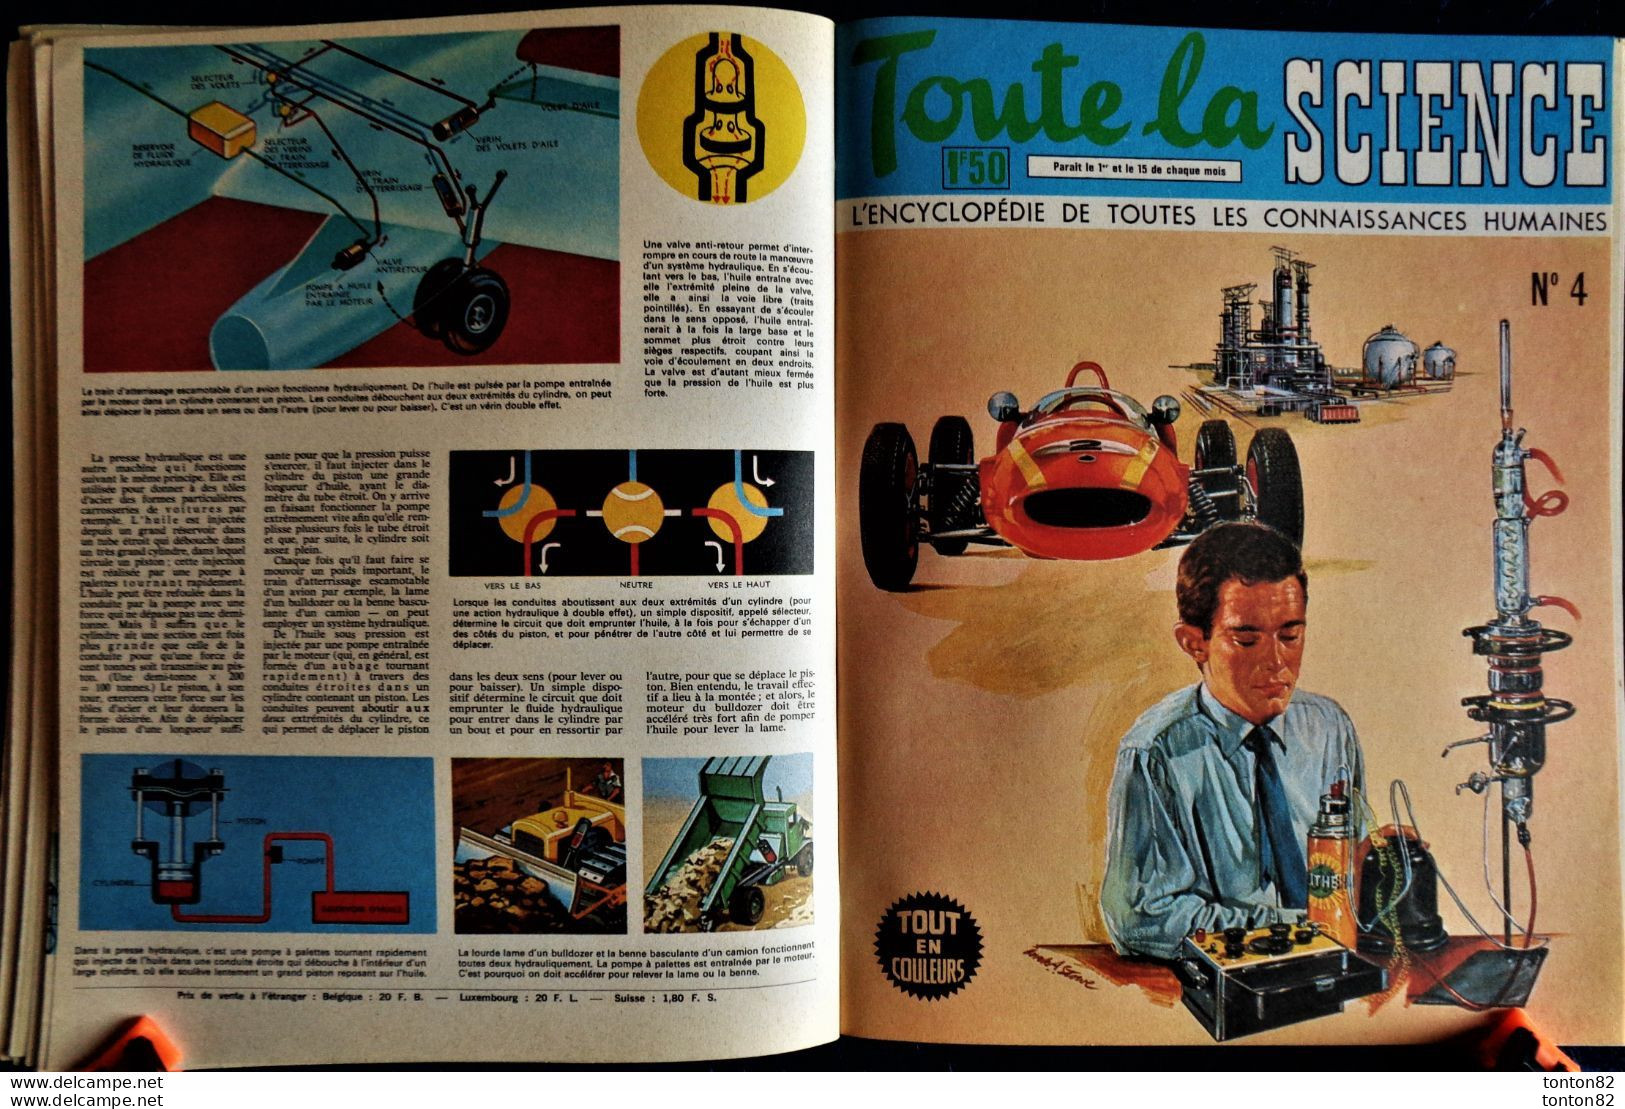 Panorama de la Science - Volume 1 - ( Contient les n° : 1, 2, 3, 4, 5, 6 ) - ( 1965 ) .